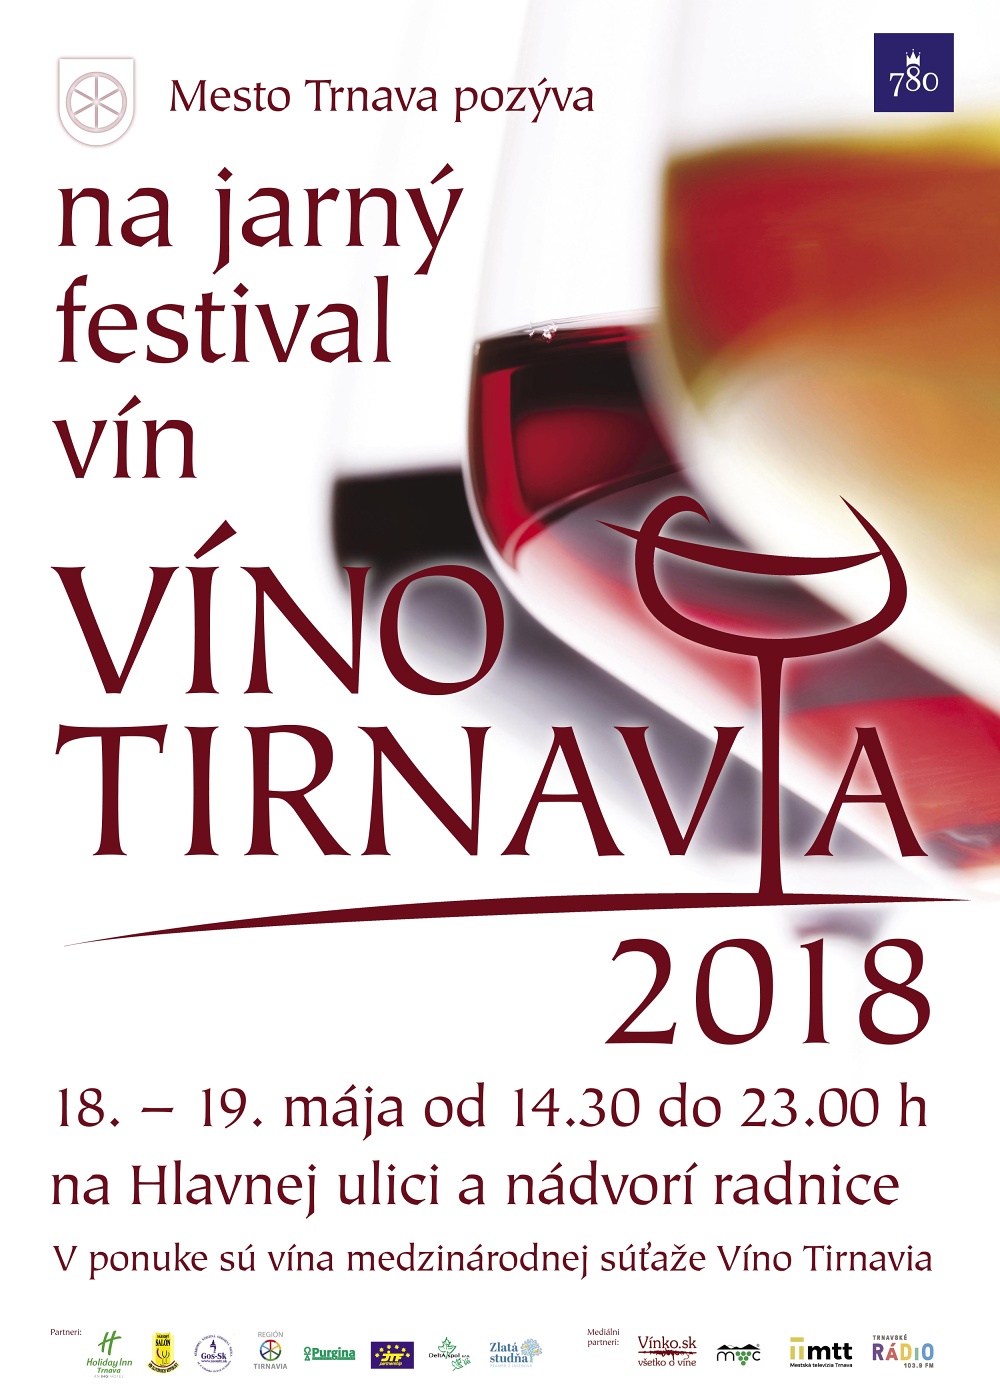 Vno Tirnavia 2018 - 16. ronk